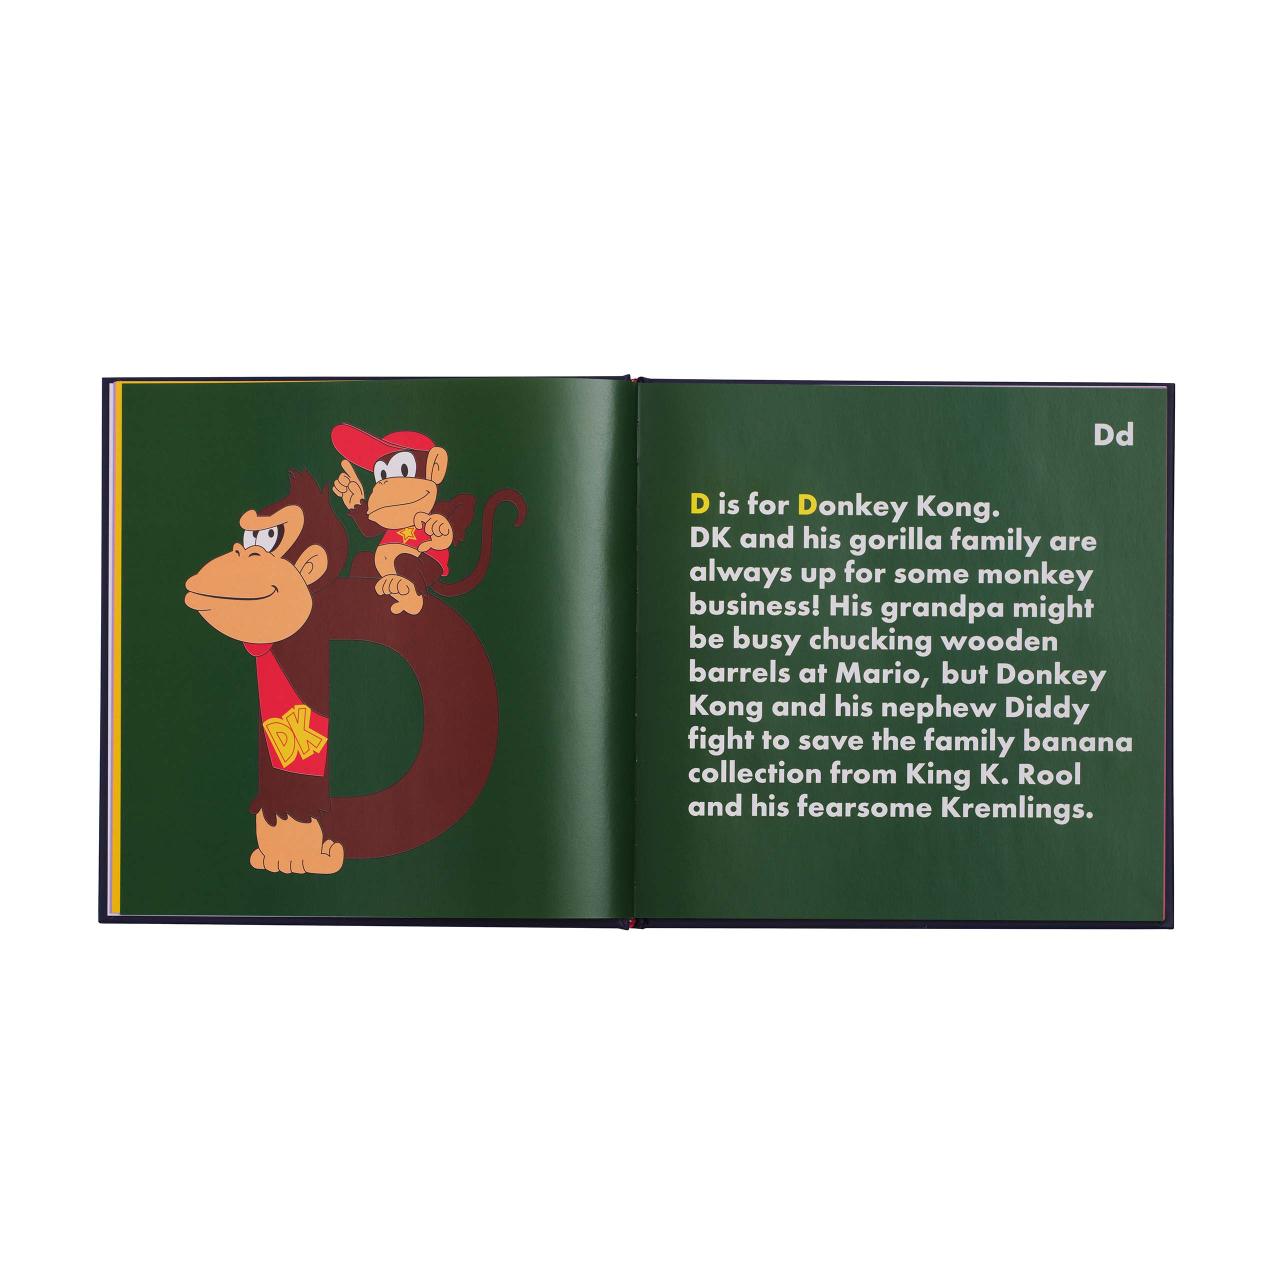 Video Game Legends Alphabet Book